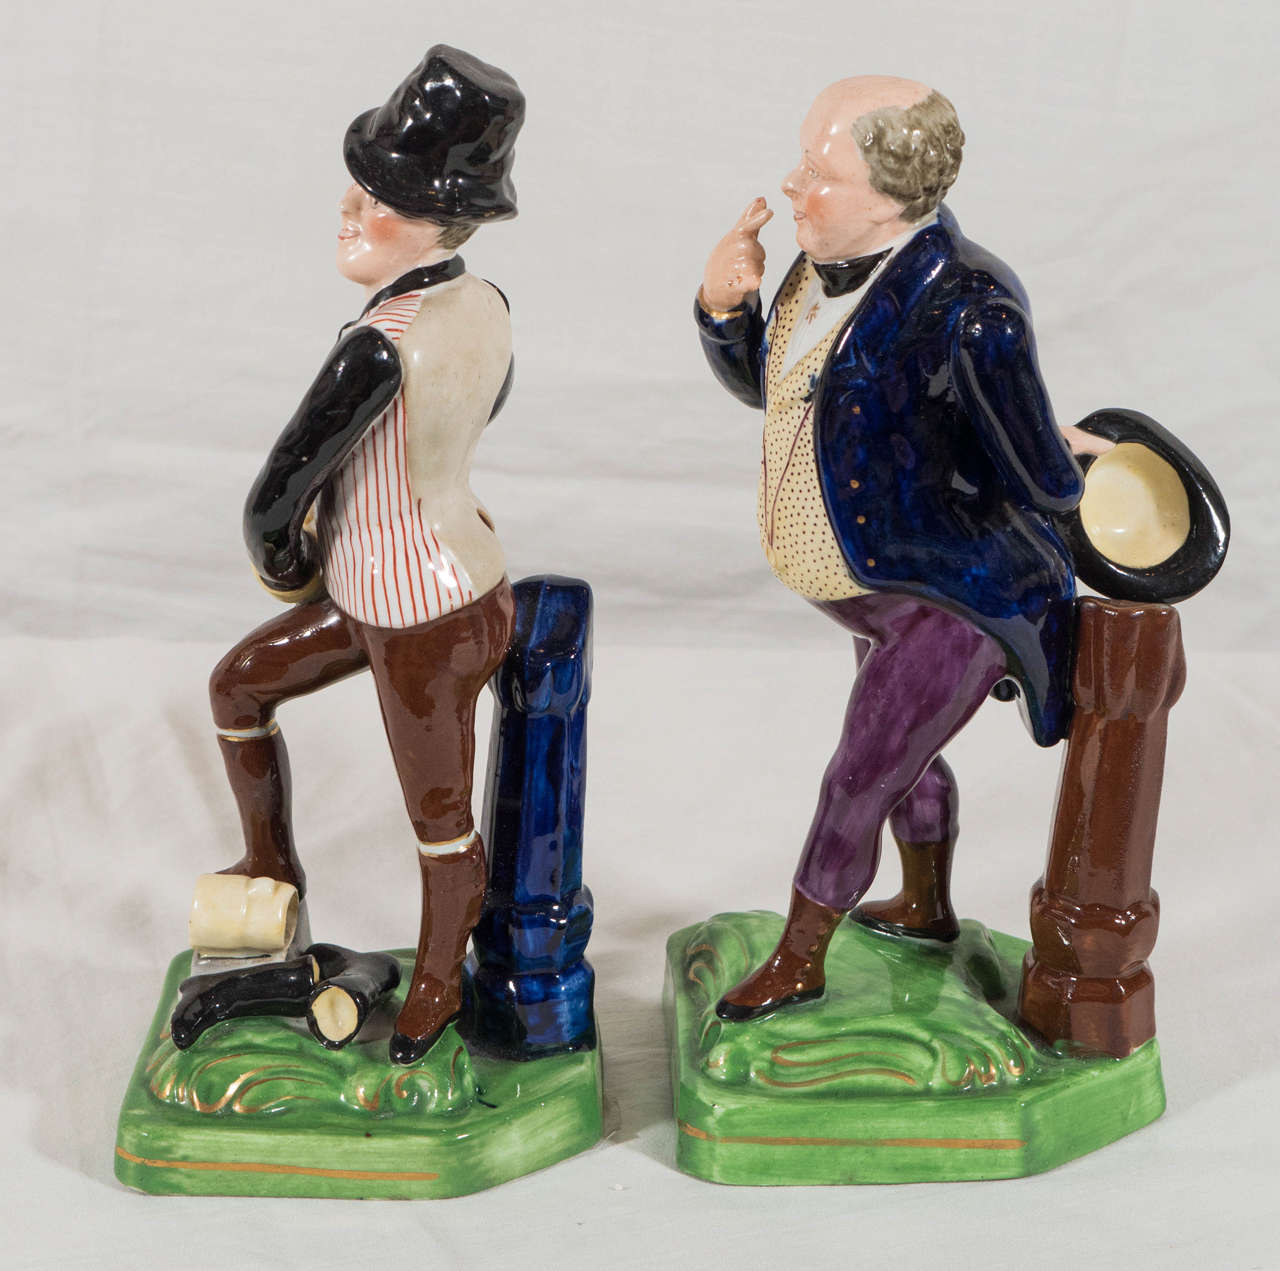 English Staffordshire Figures Dickens' Mr Pickwick & Sam Weller the Bootblack circa 1840